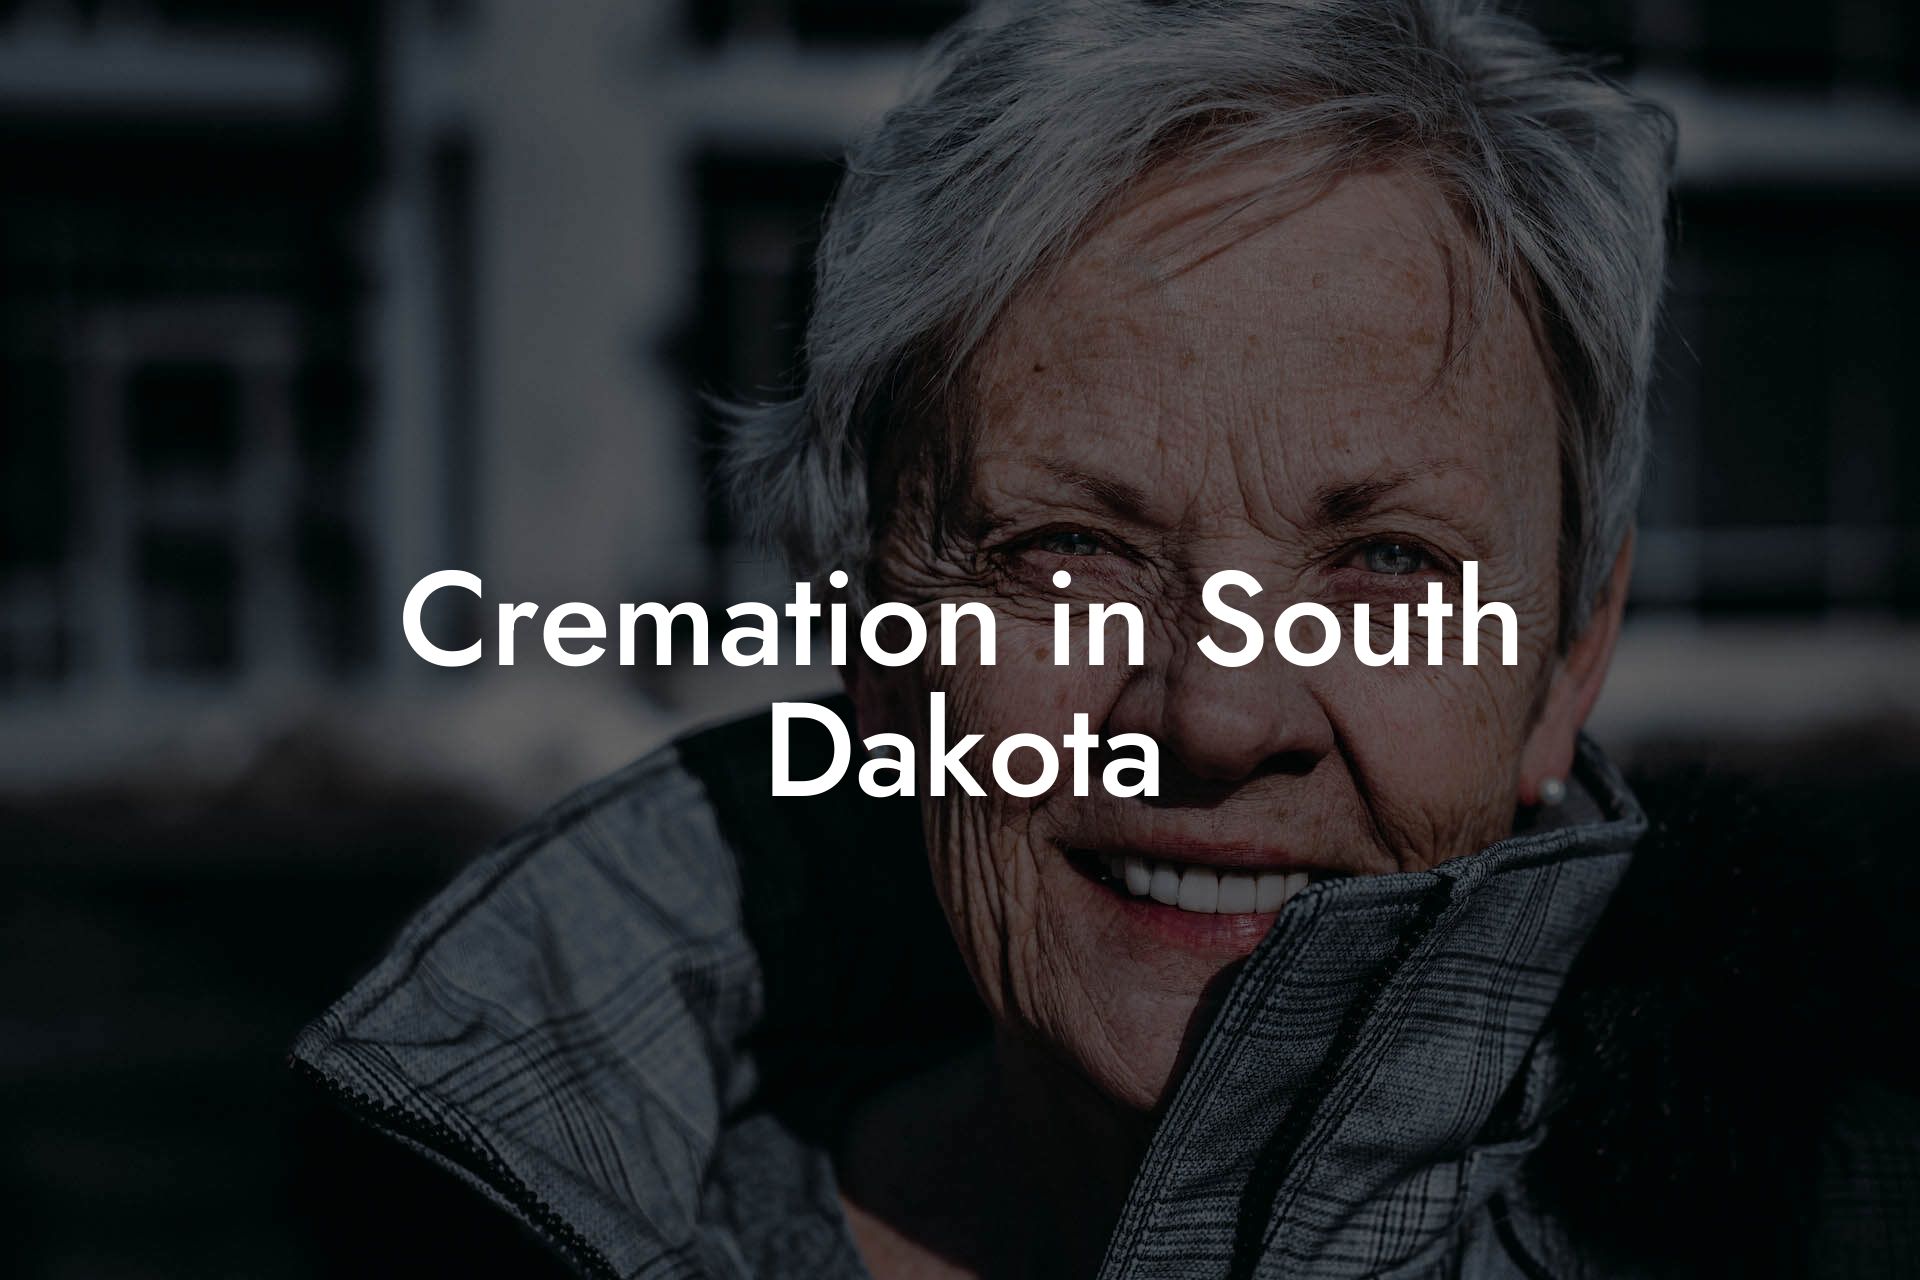 Cremation in South Dakota